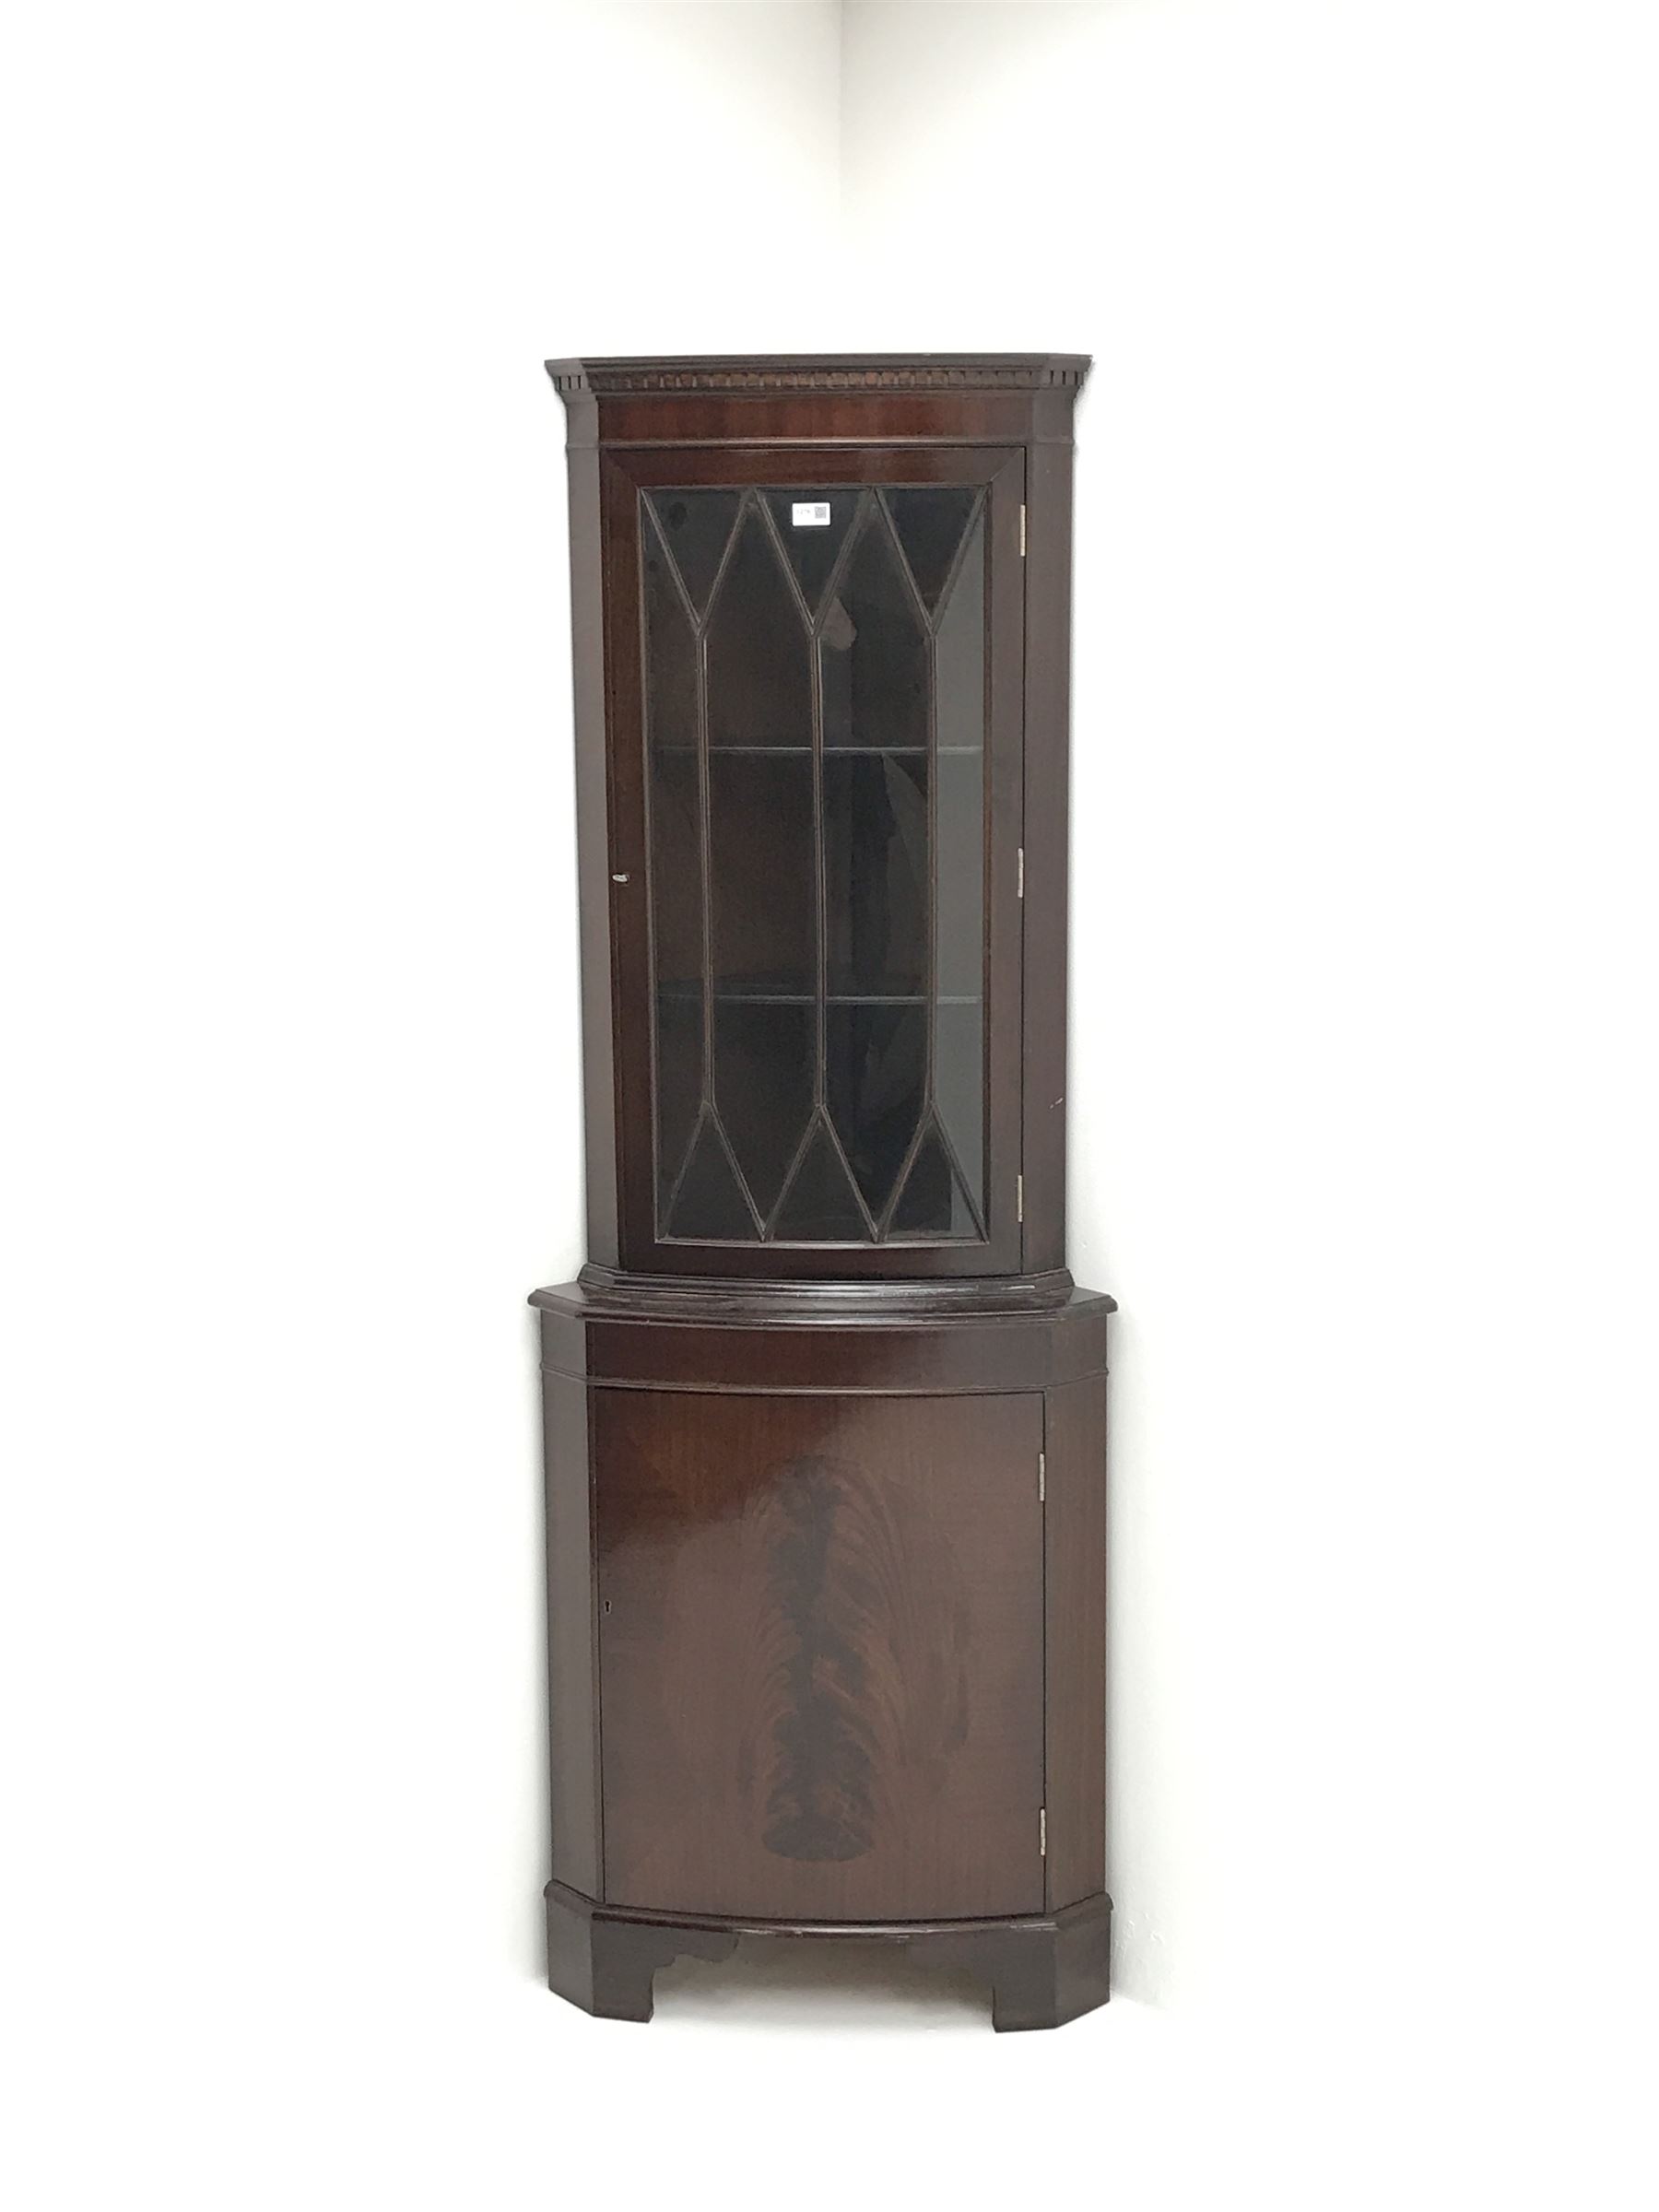 Mid century mahogany corner display cabinet, single door enclosing shelves above single cupboard, W6 - Image 2 of 3